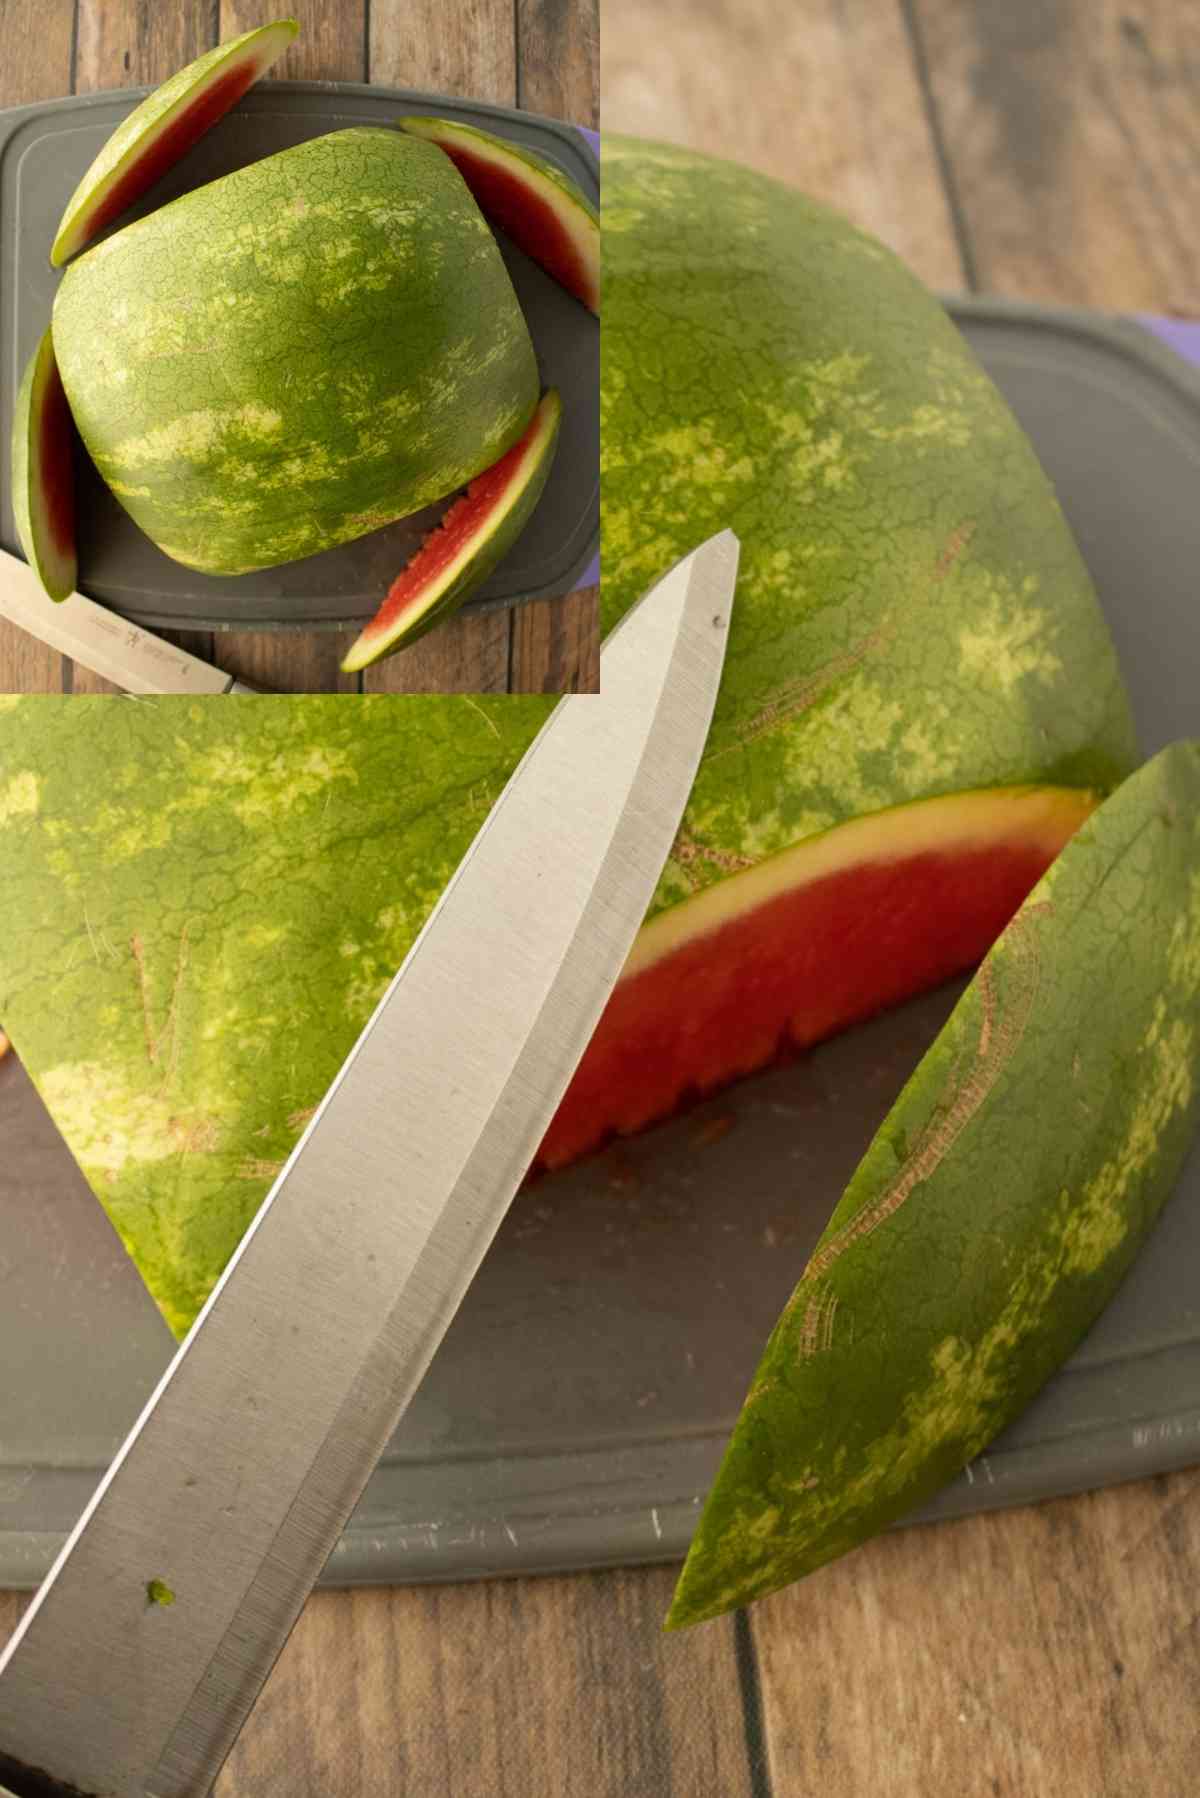 Cut the four edges off the watermelon.